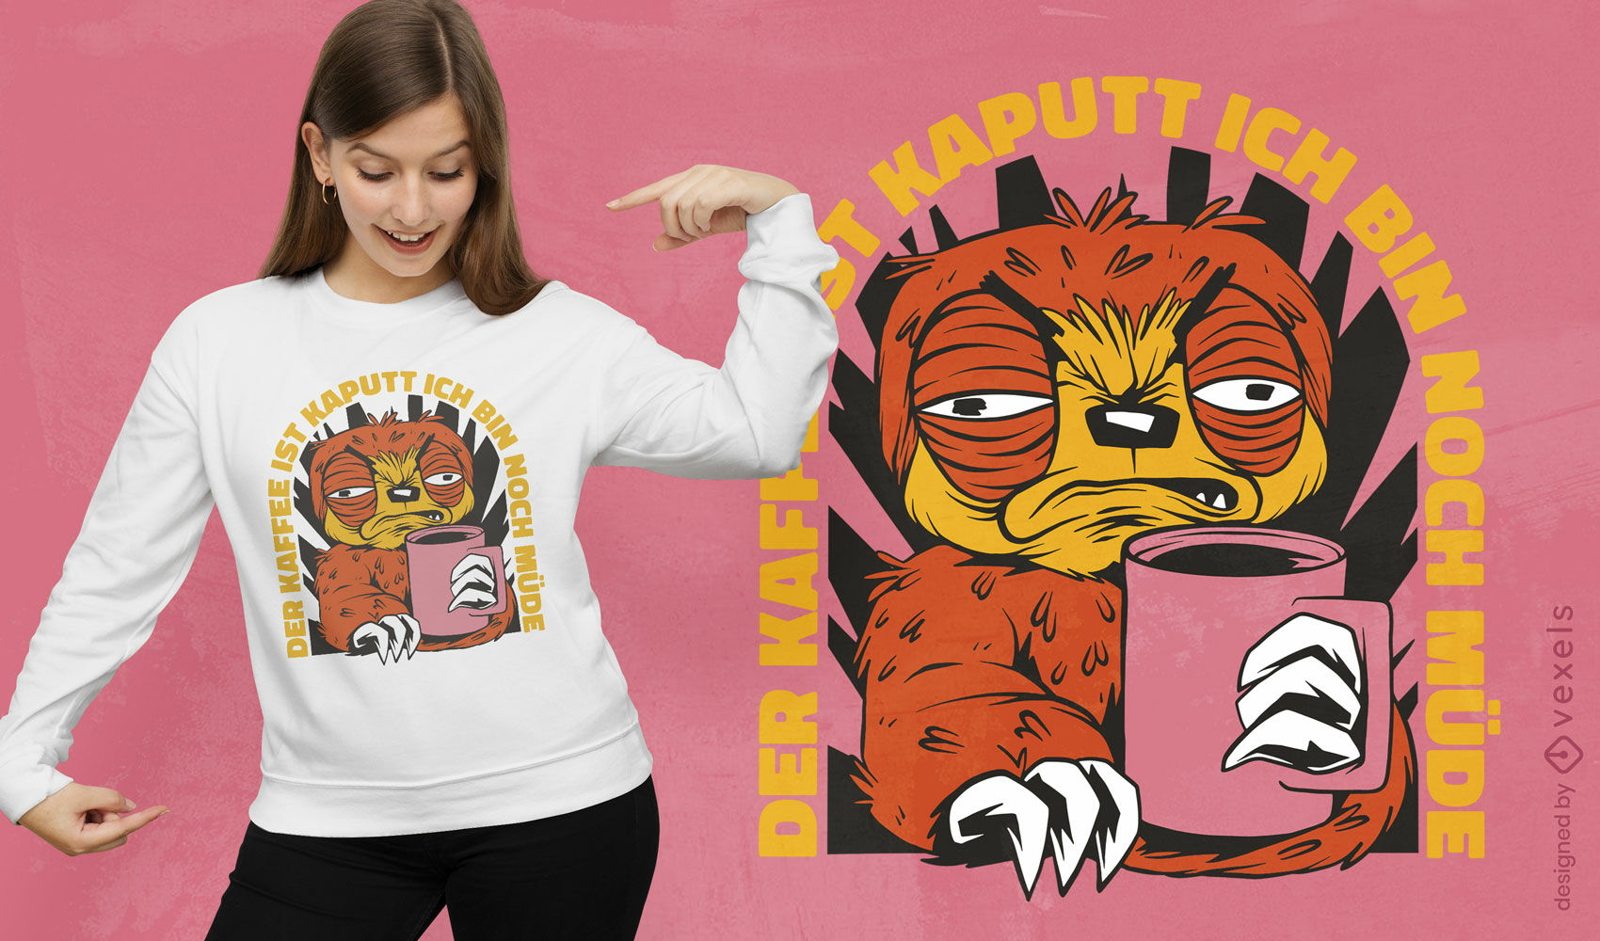 Grumpy sloth coffee t-shirt design